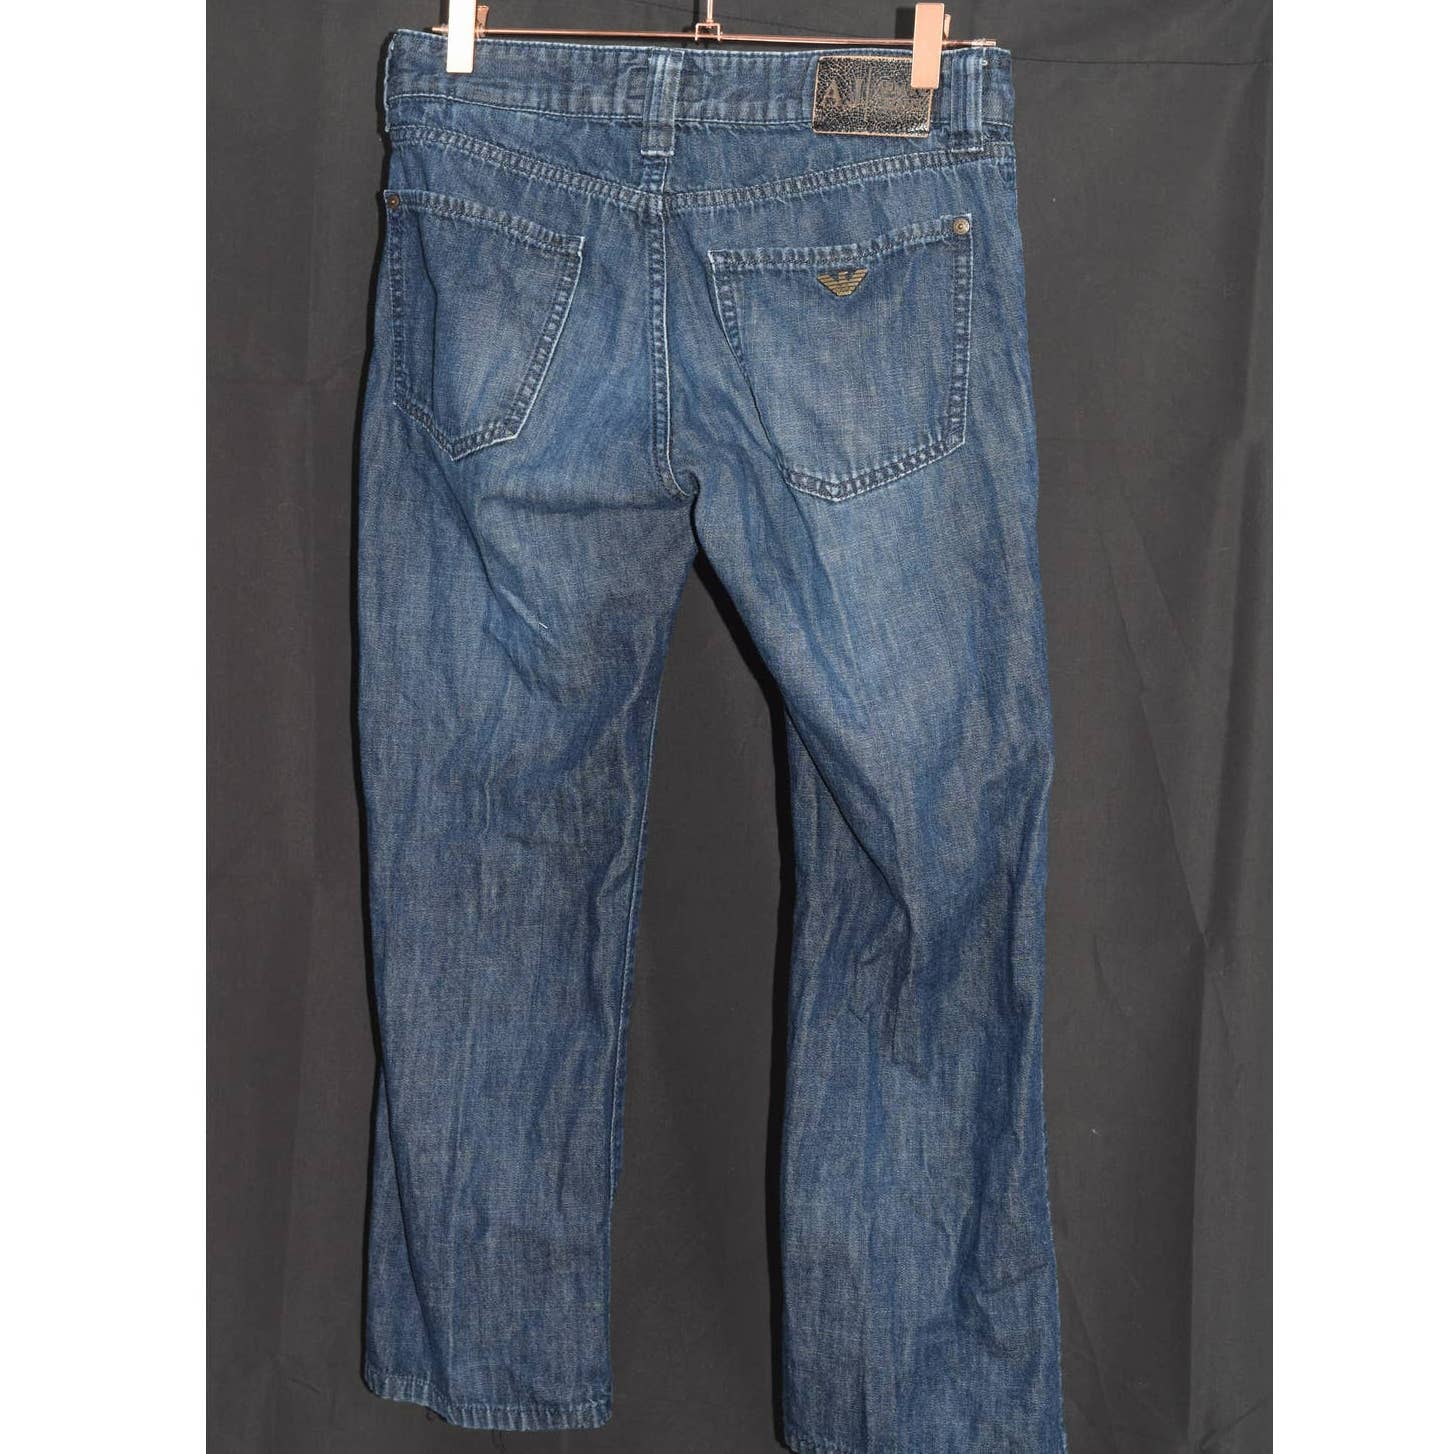 Armani Jeans Medium Wash Denim Jeans - 30